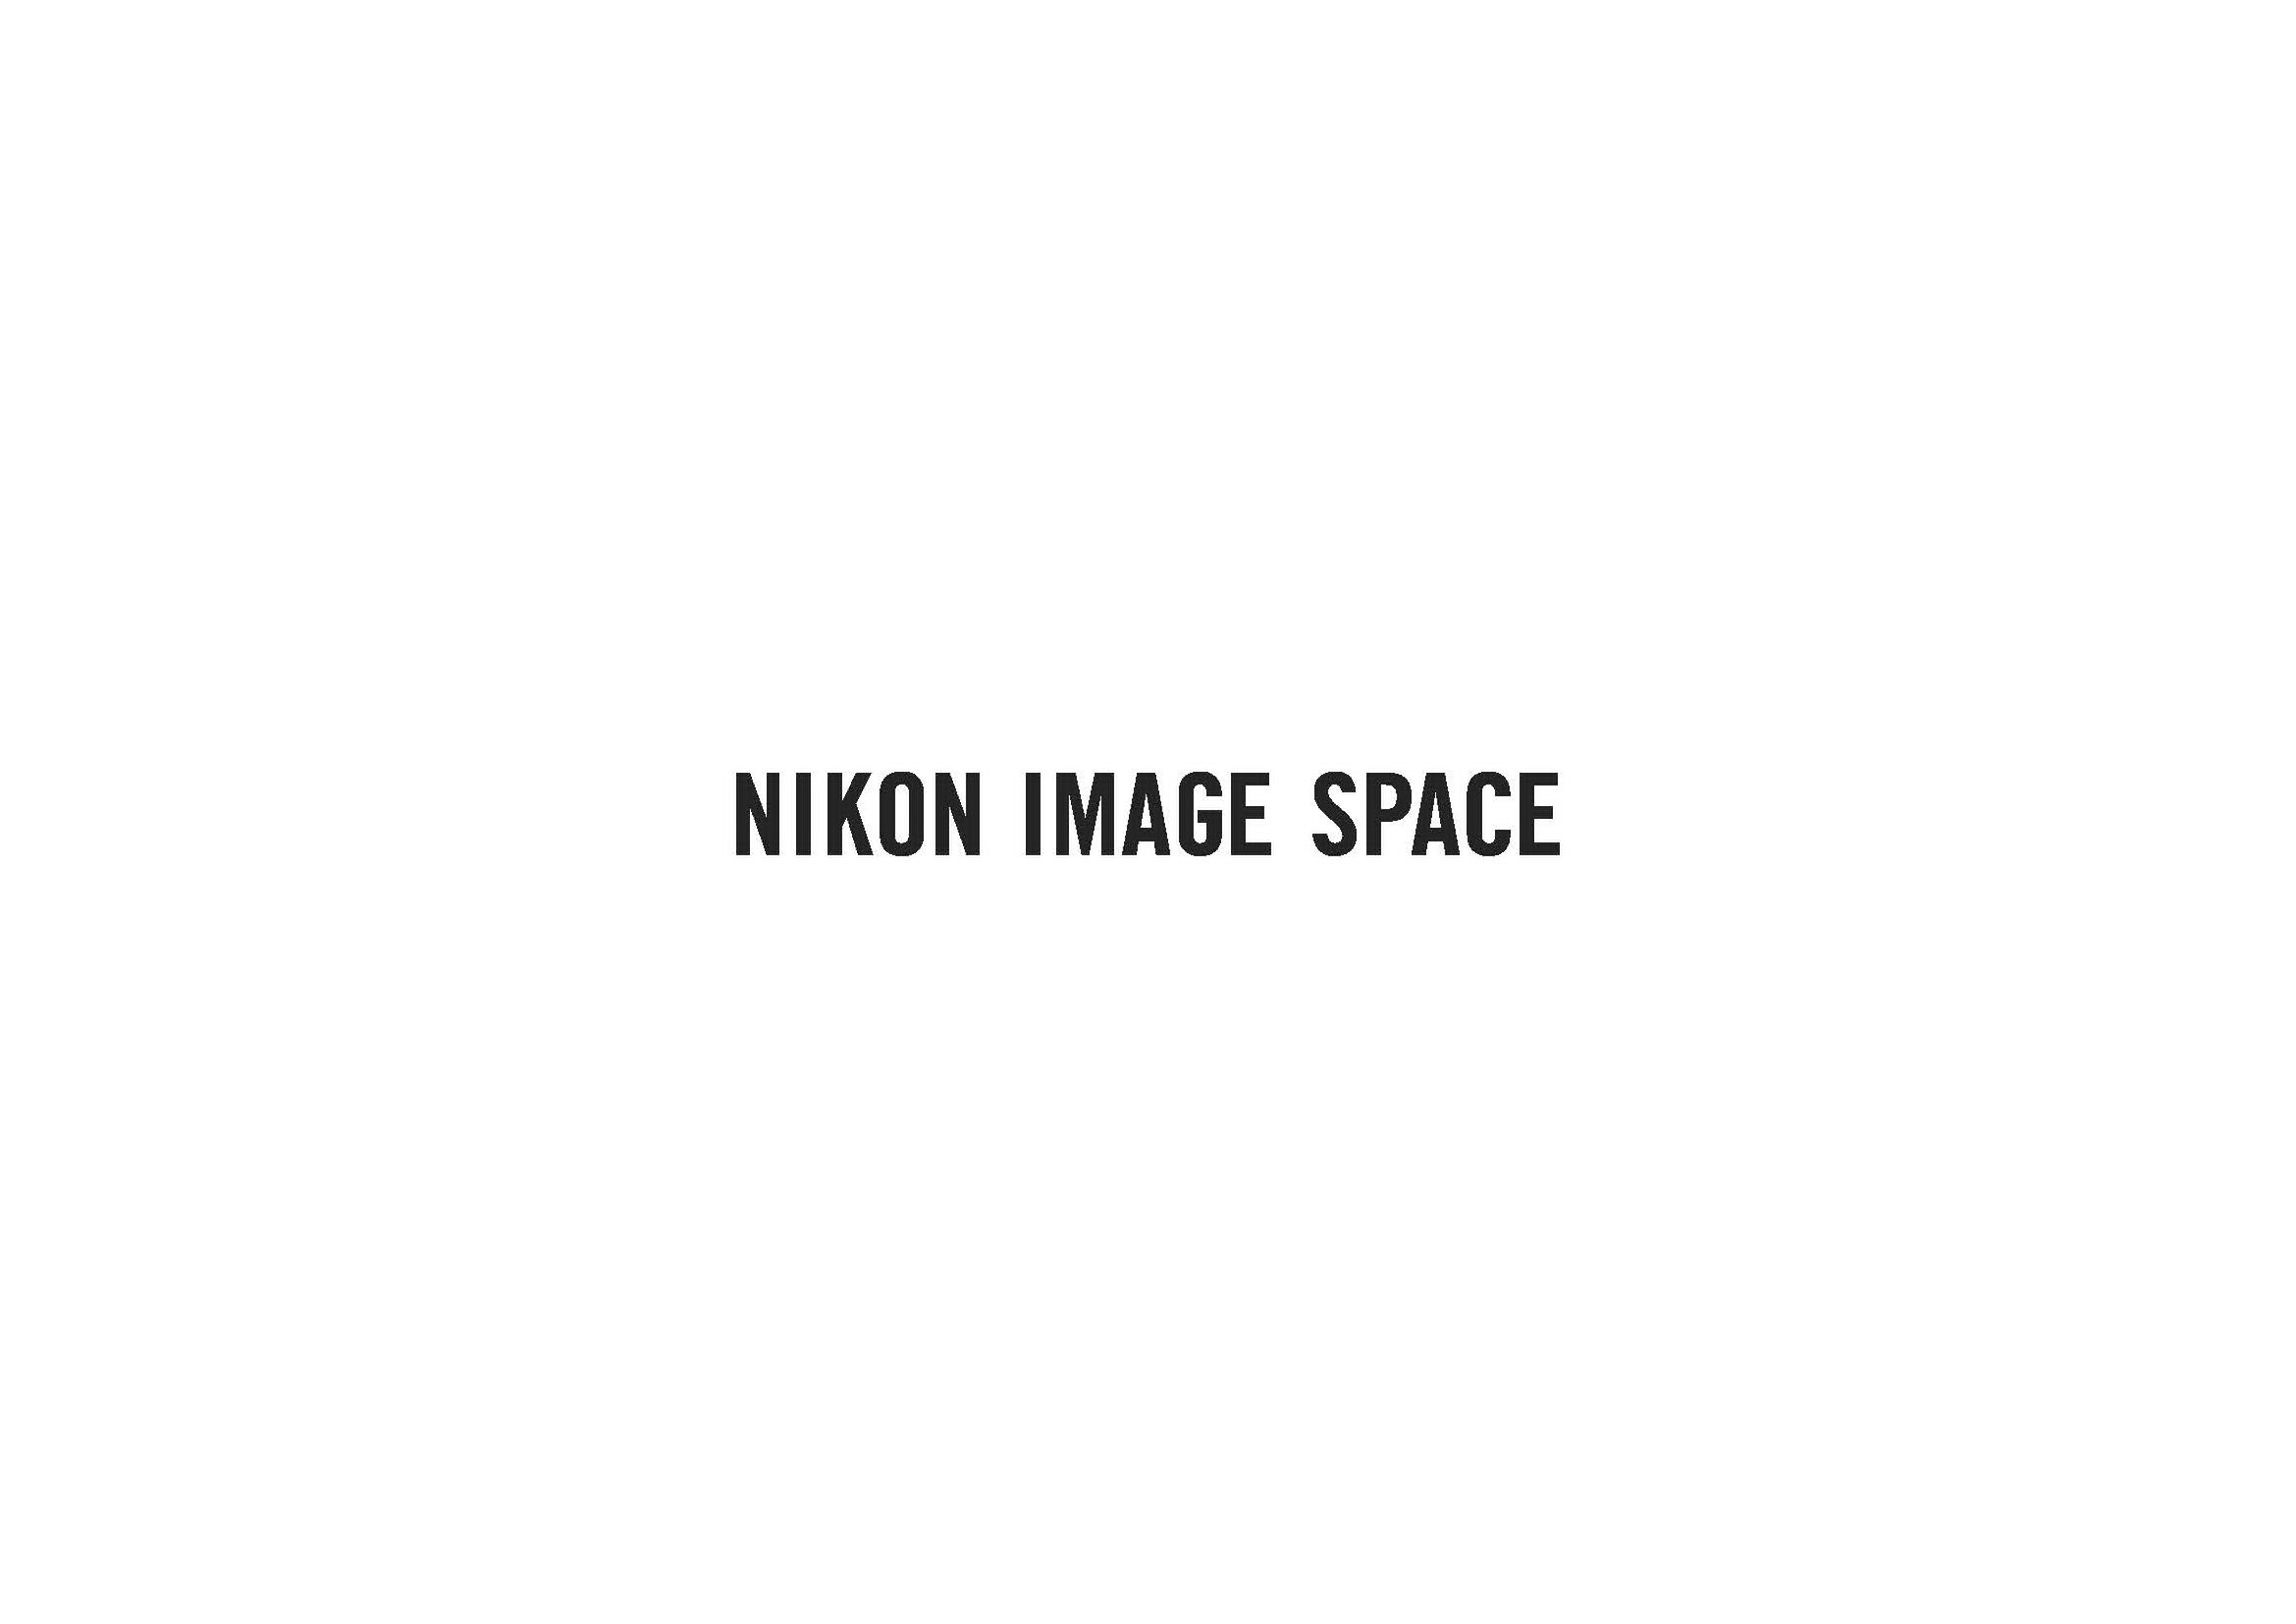  NIKON IMAGE SPACE